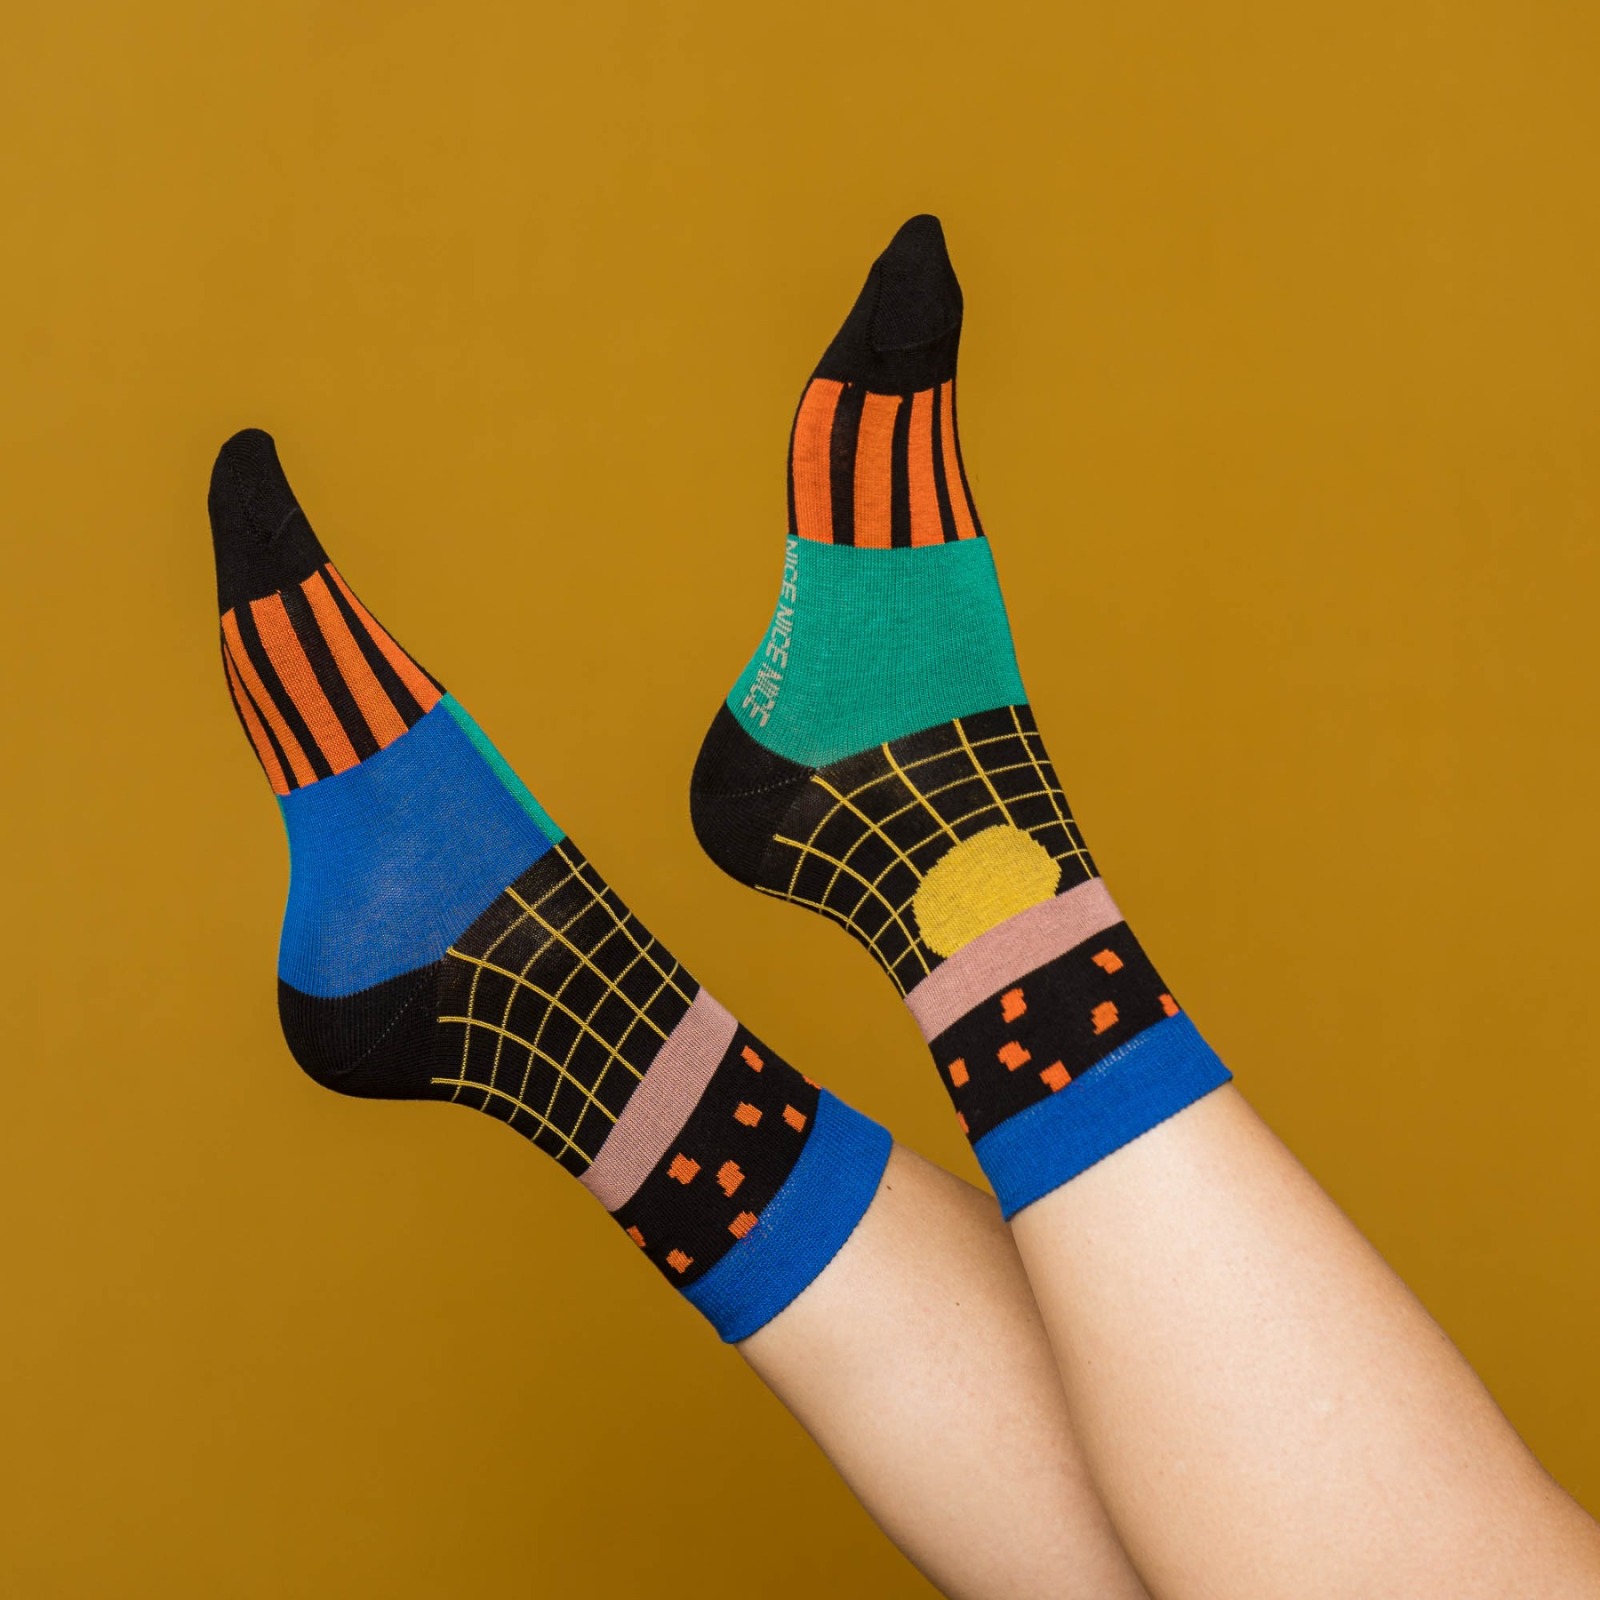 nicenicenice - nice socks pattern black 2